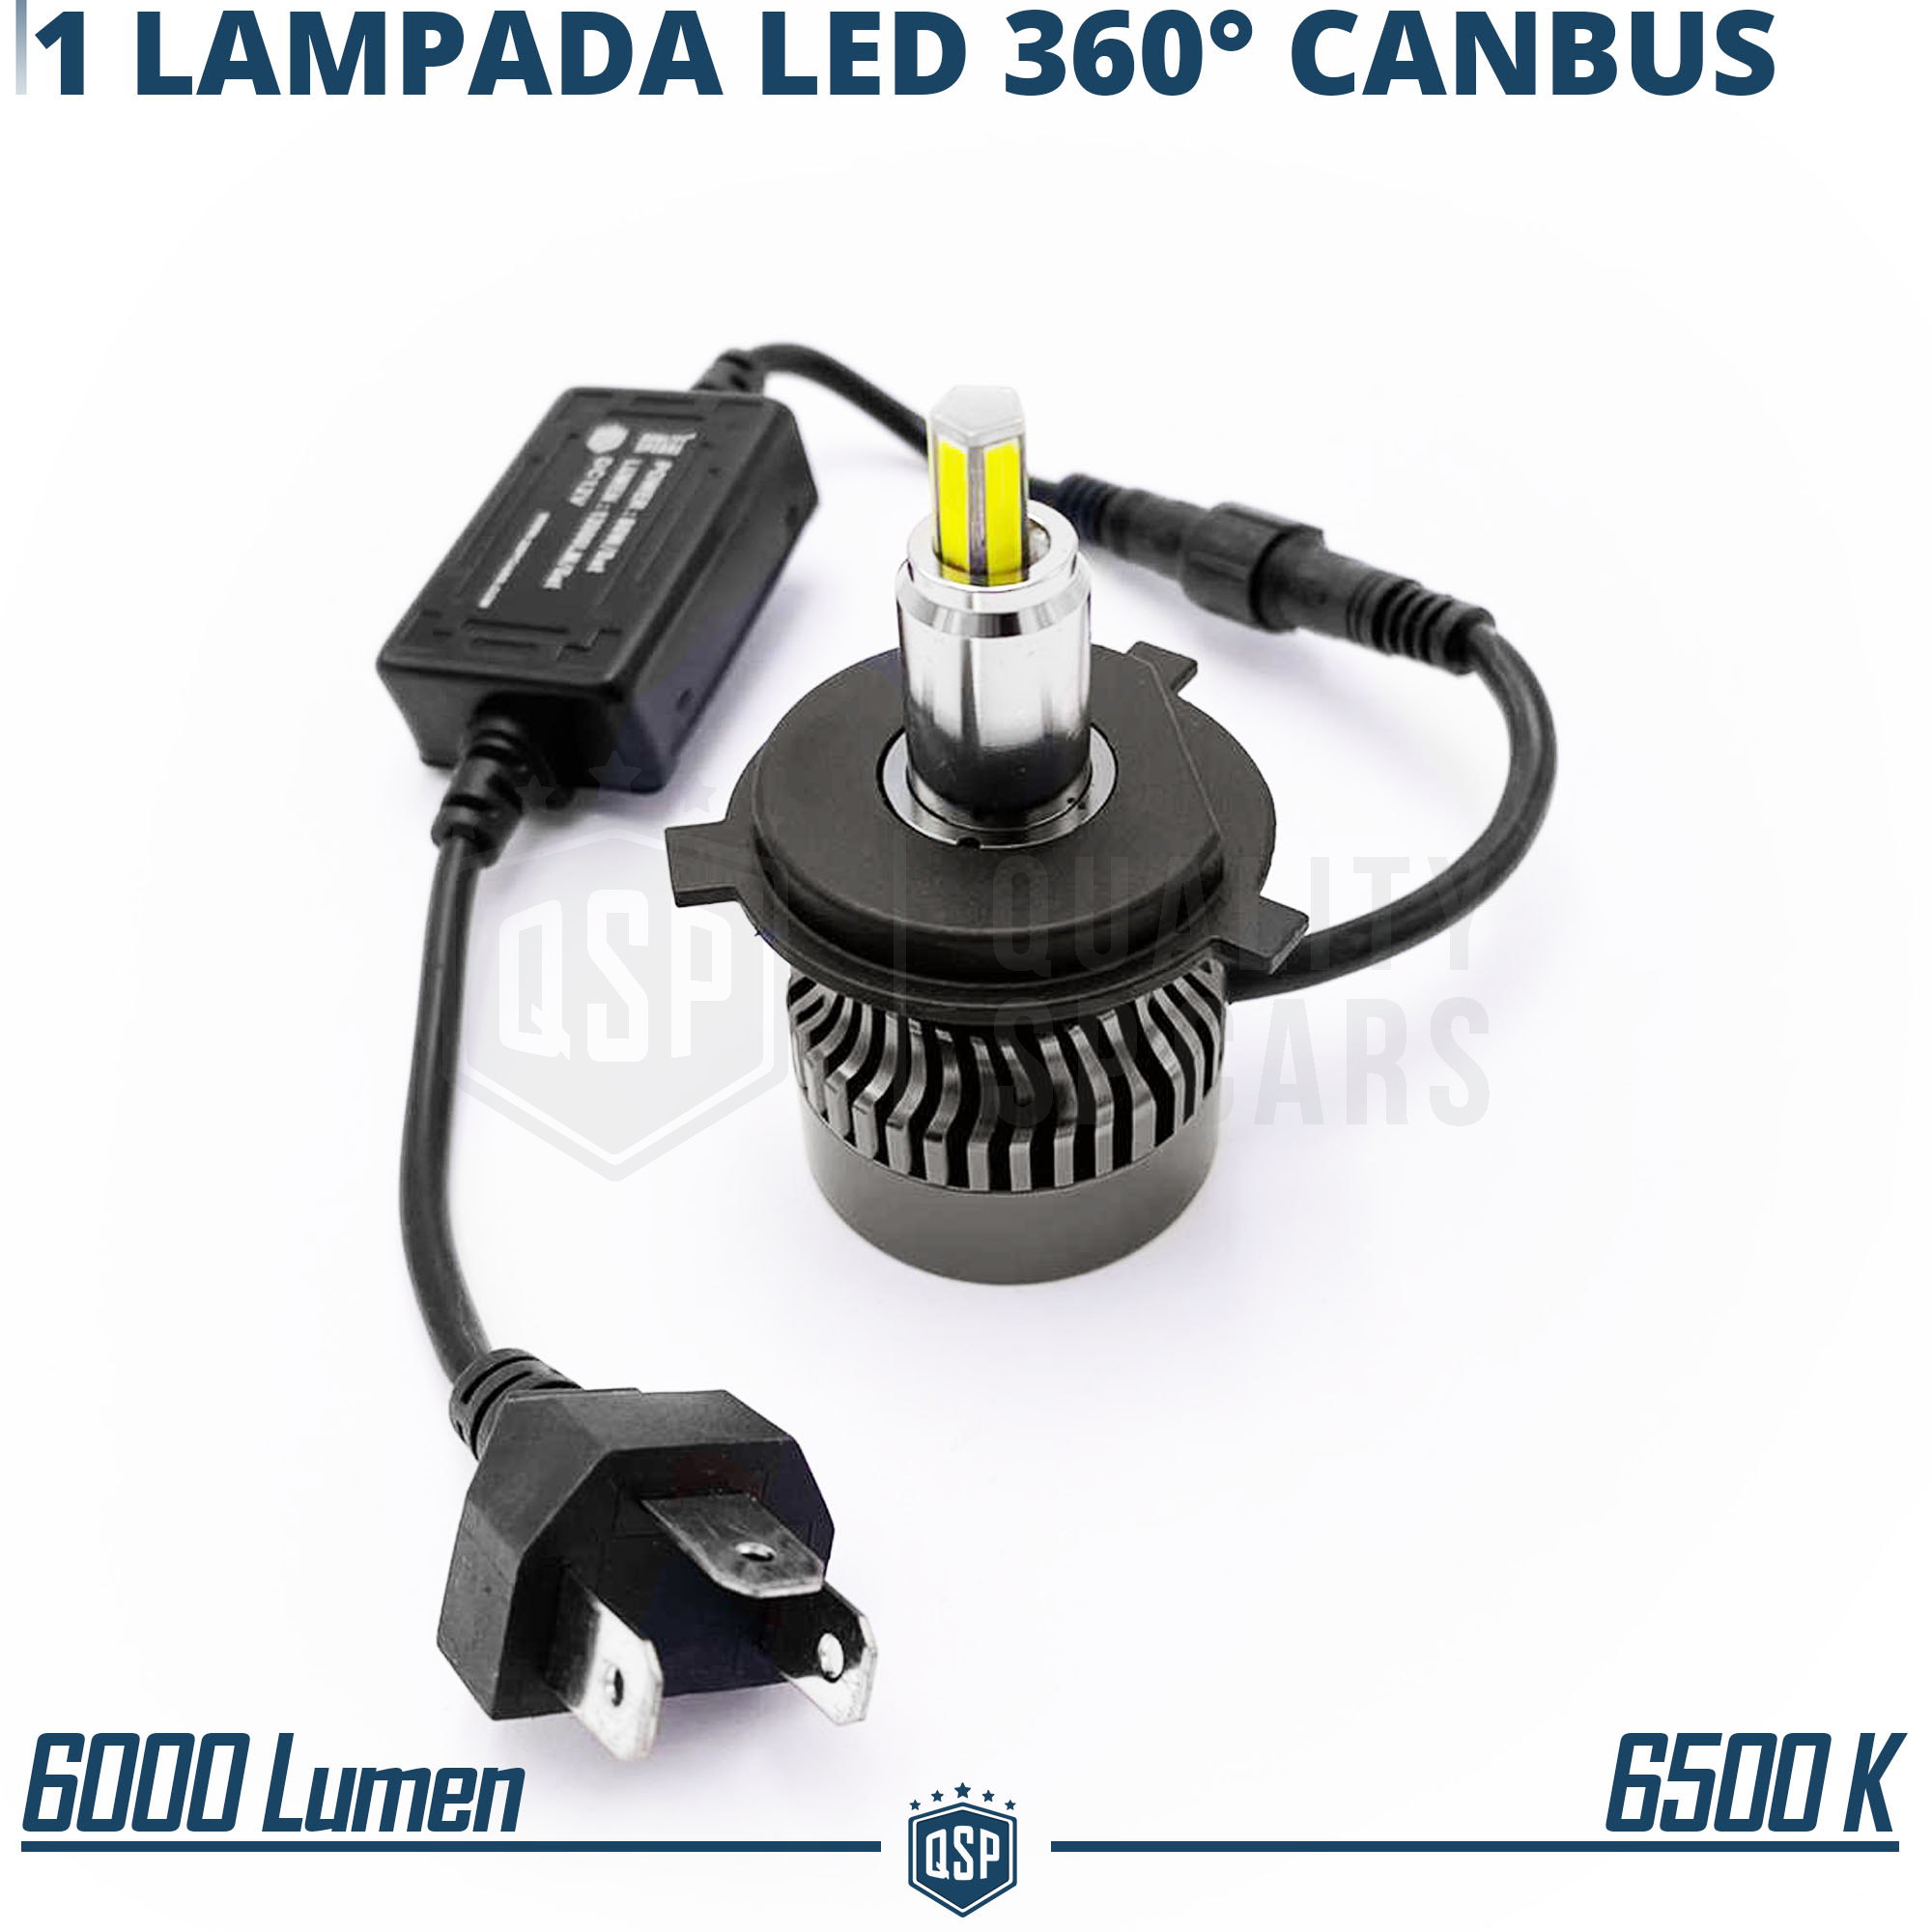 1 Lampadina FULL LED H7 per LENTICOLARE | Luce Potente 360° 6000 Lumen |  Conversione da ALOGENA H7 in LED | CANbus Plug & Play